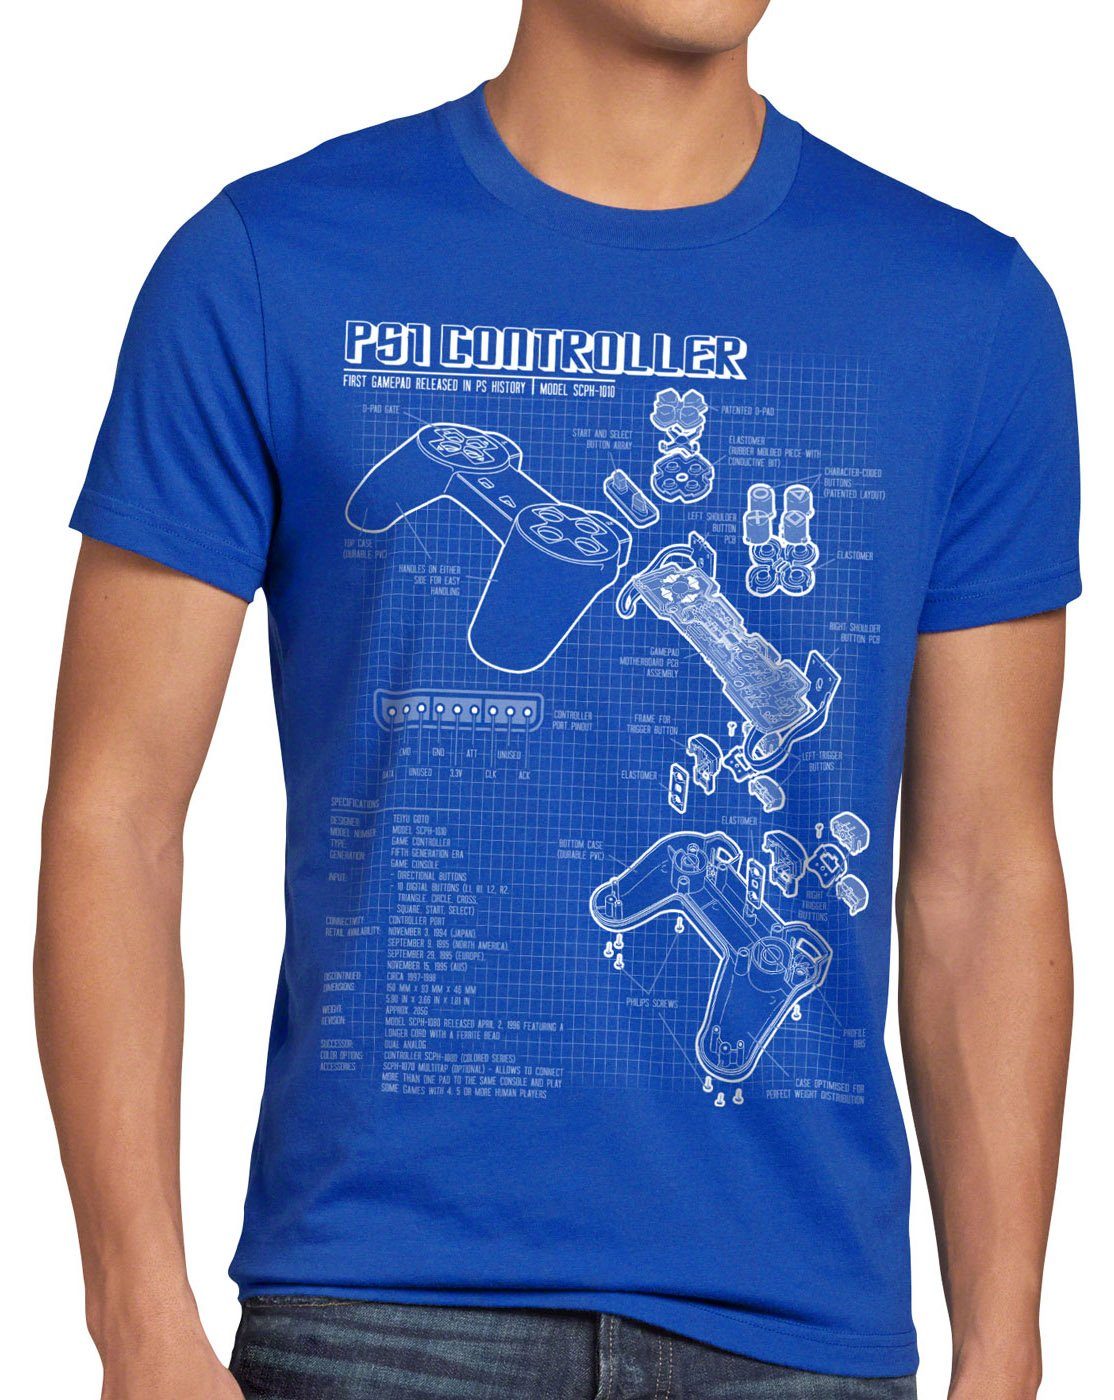 style3 Print-Shirt Herren T-Shirt PS1 Controller Blaupause PS gamepad konsole classic gamer